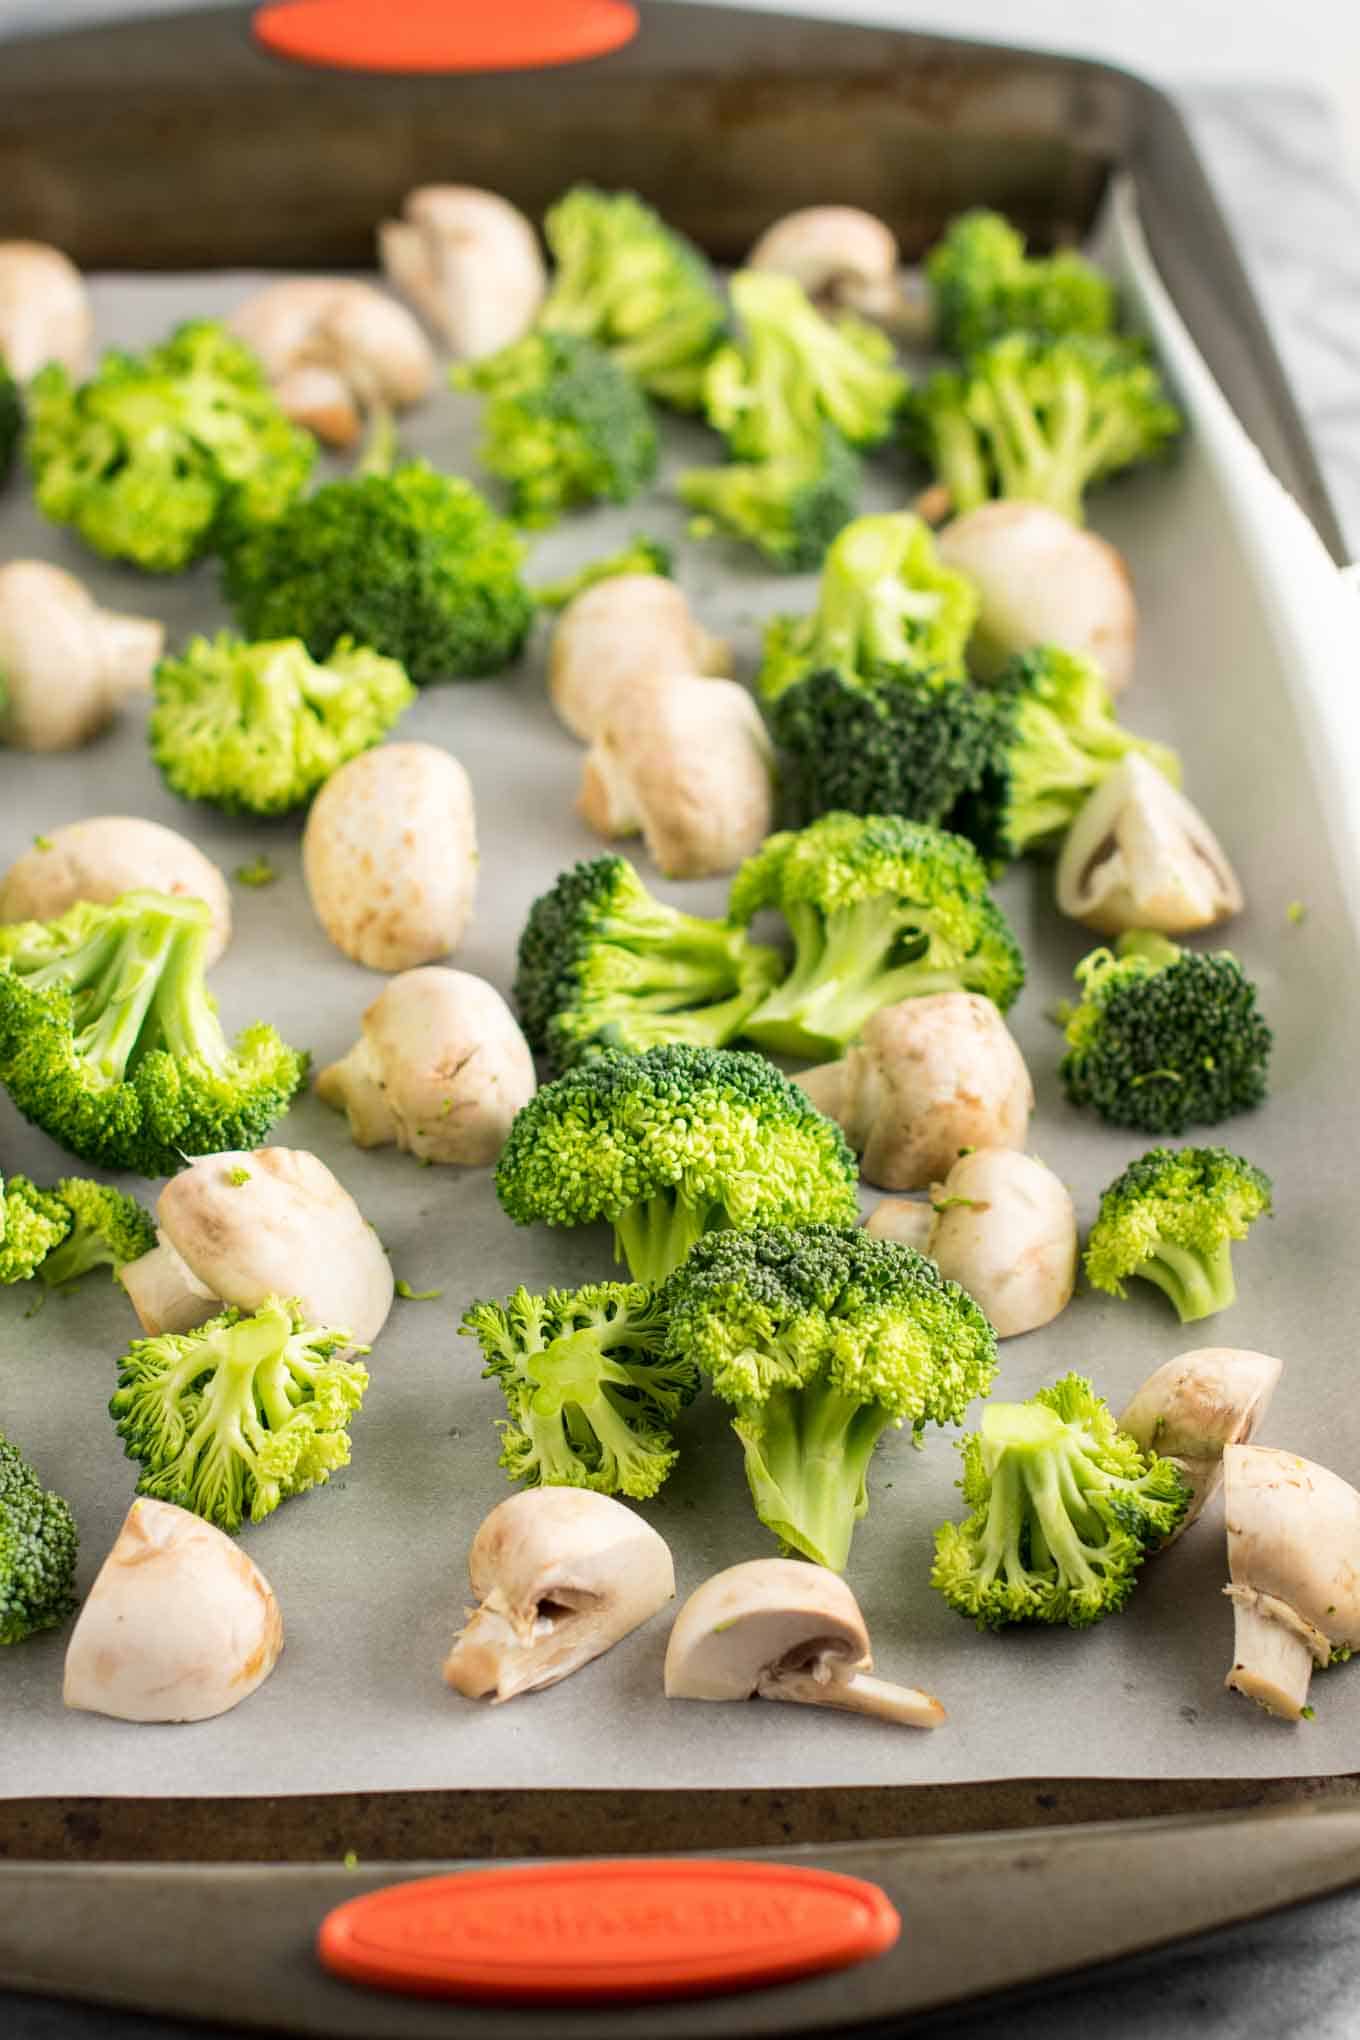  Roasted broccoli and mushrooms recipe - easy side dish! This was so easy and really good. We will be making it a lo! #broccoliandmushrooms #vegan #sidedish #dinner #glutenfree #broccoli #mushrooms #easysidedish #mushrooms